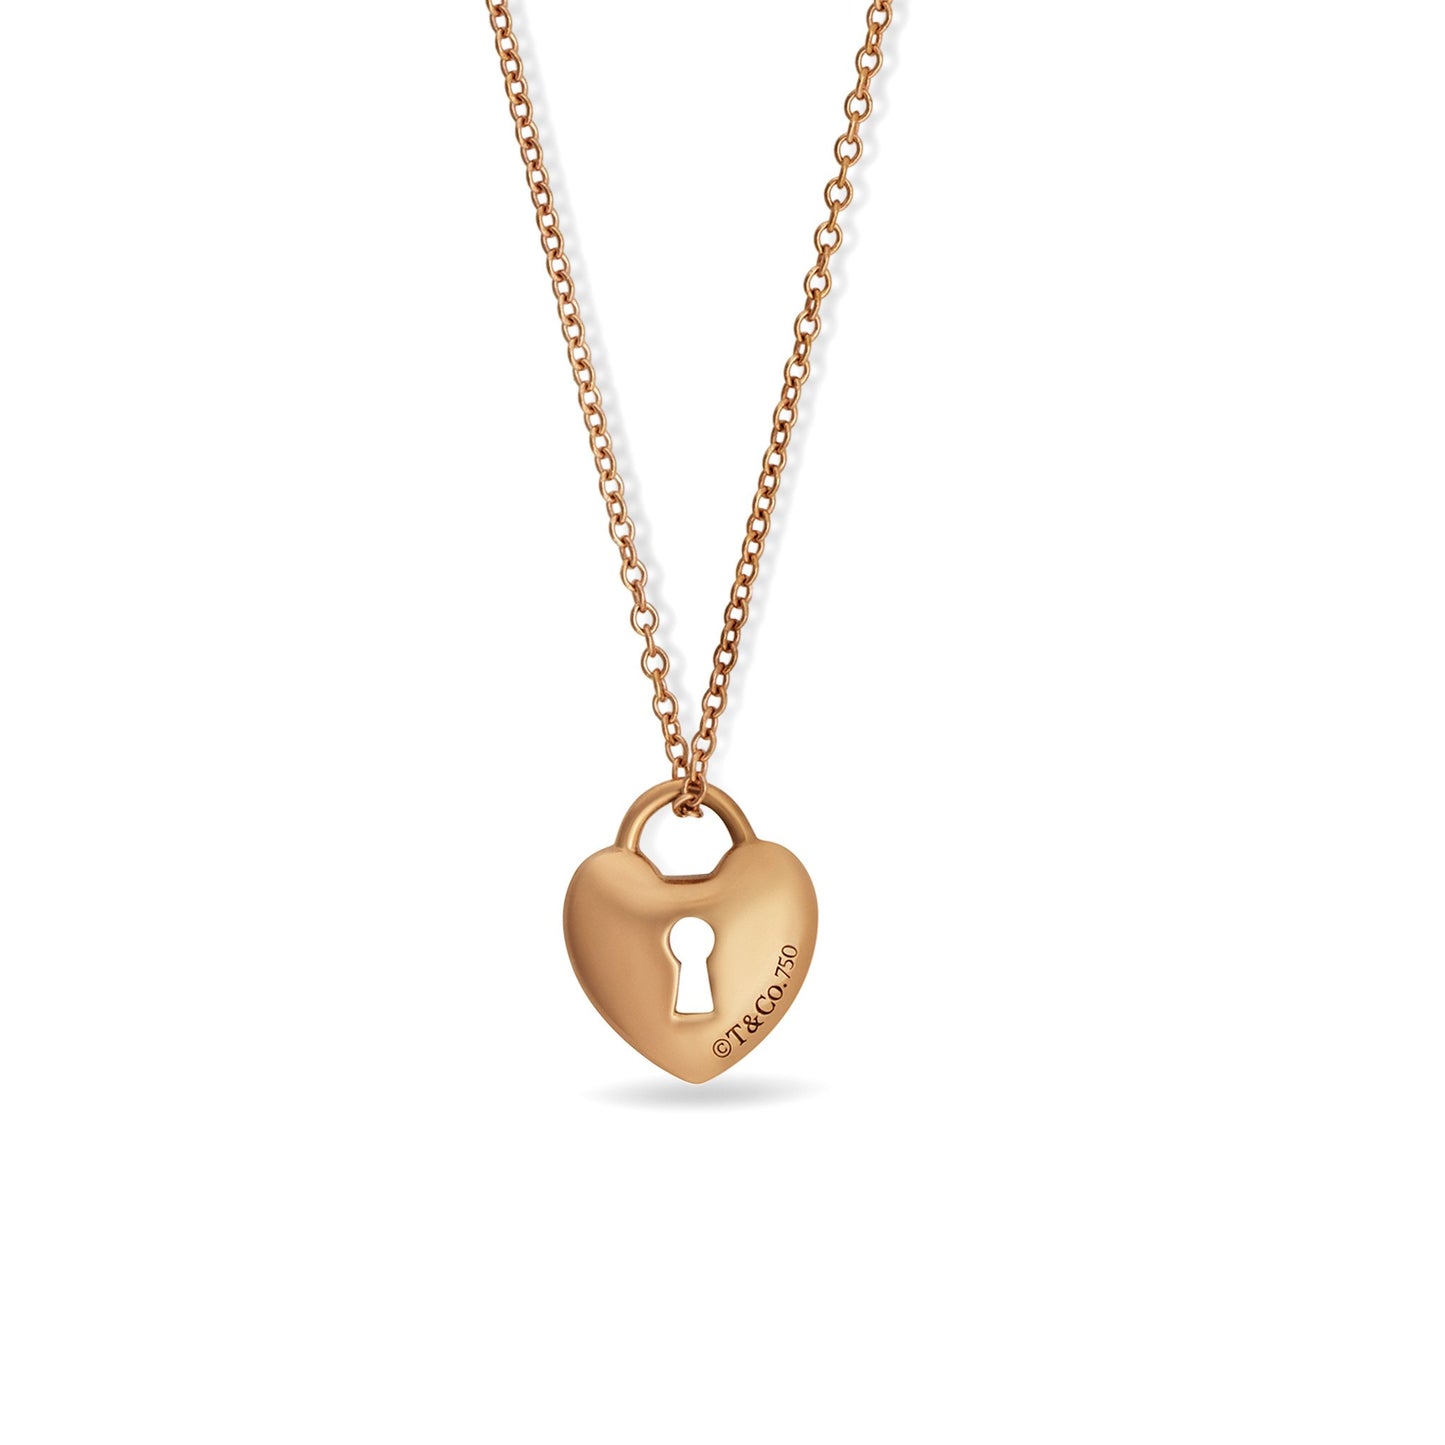 Tiffany & Co Locks small heart lock necklace in 18k rose gold 16